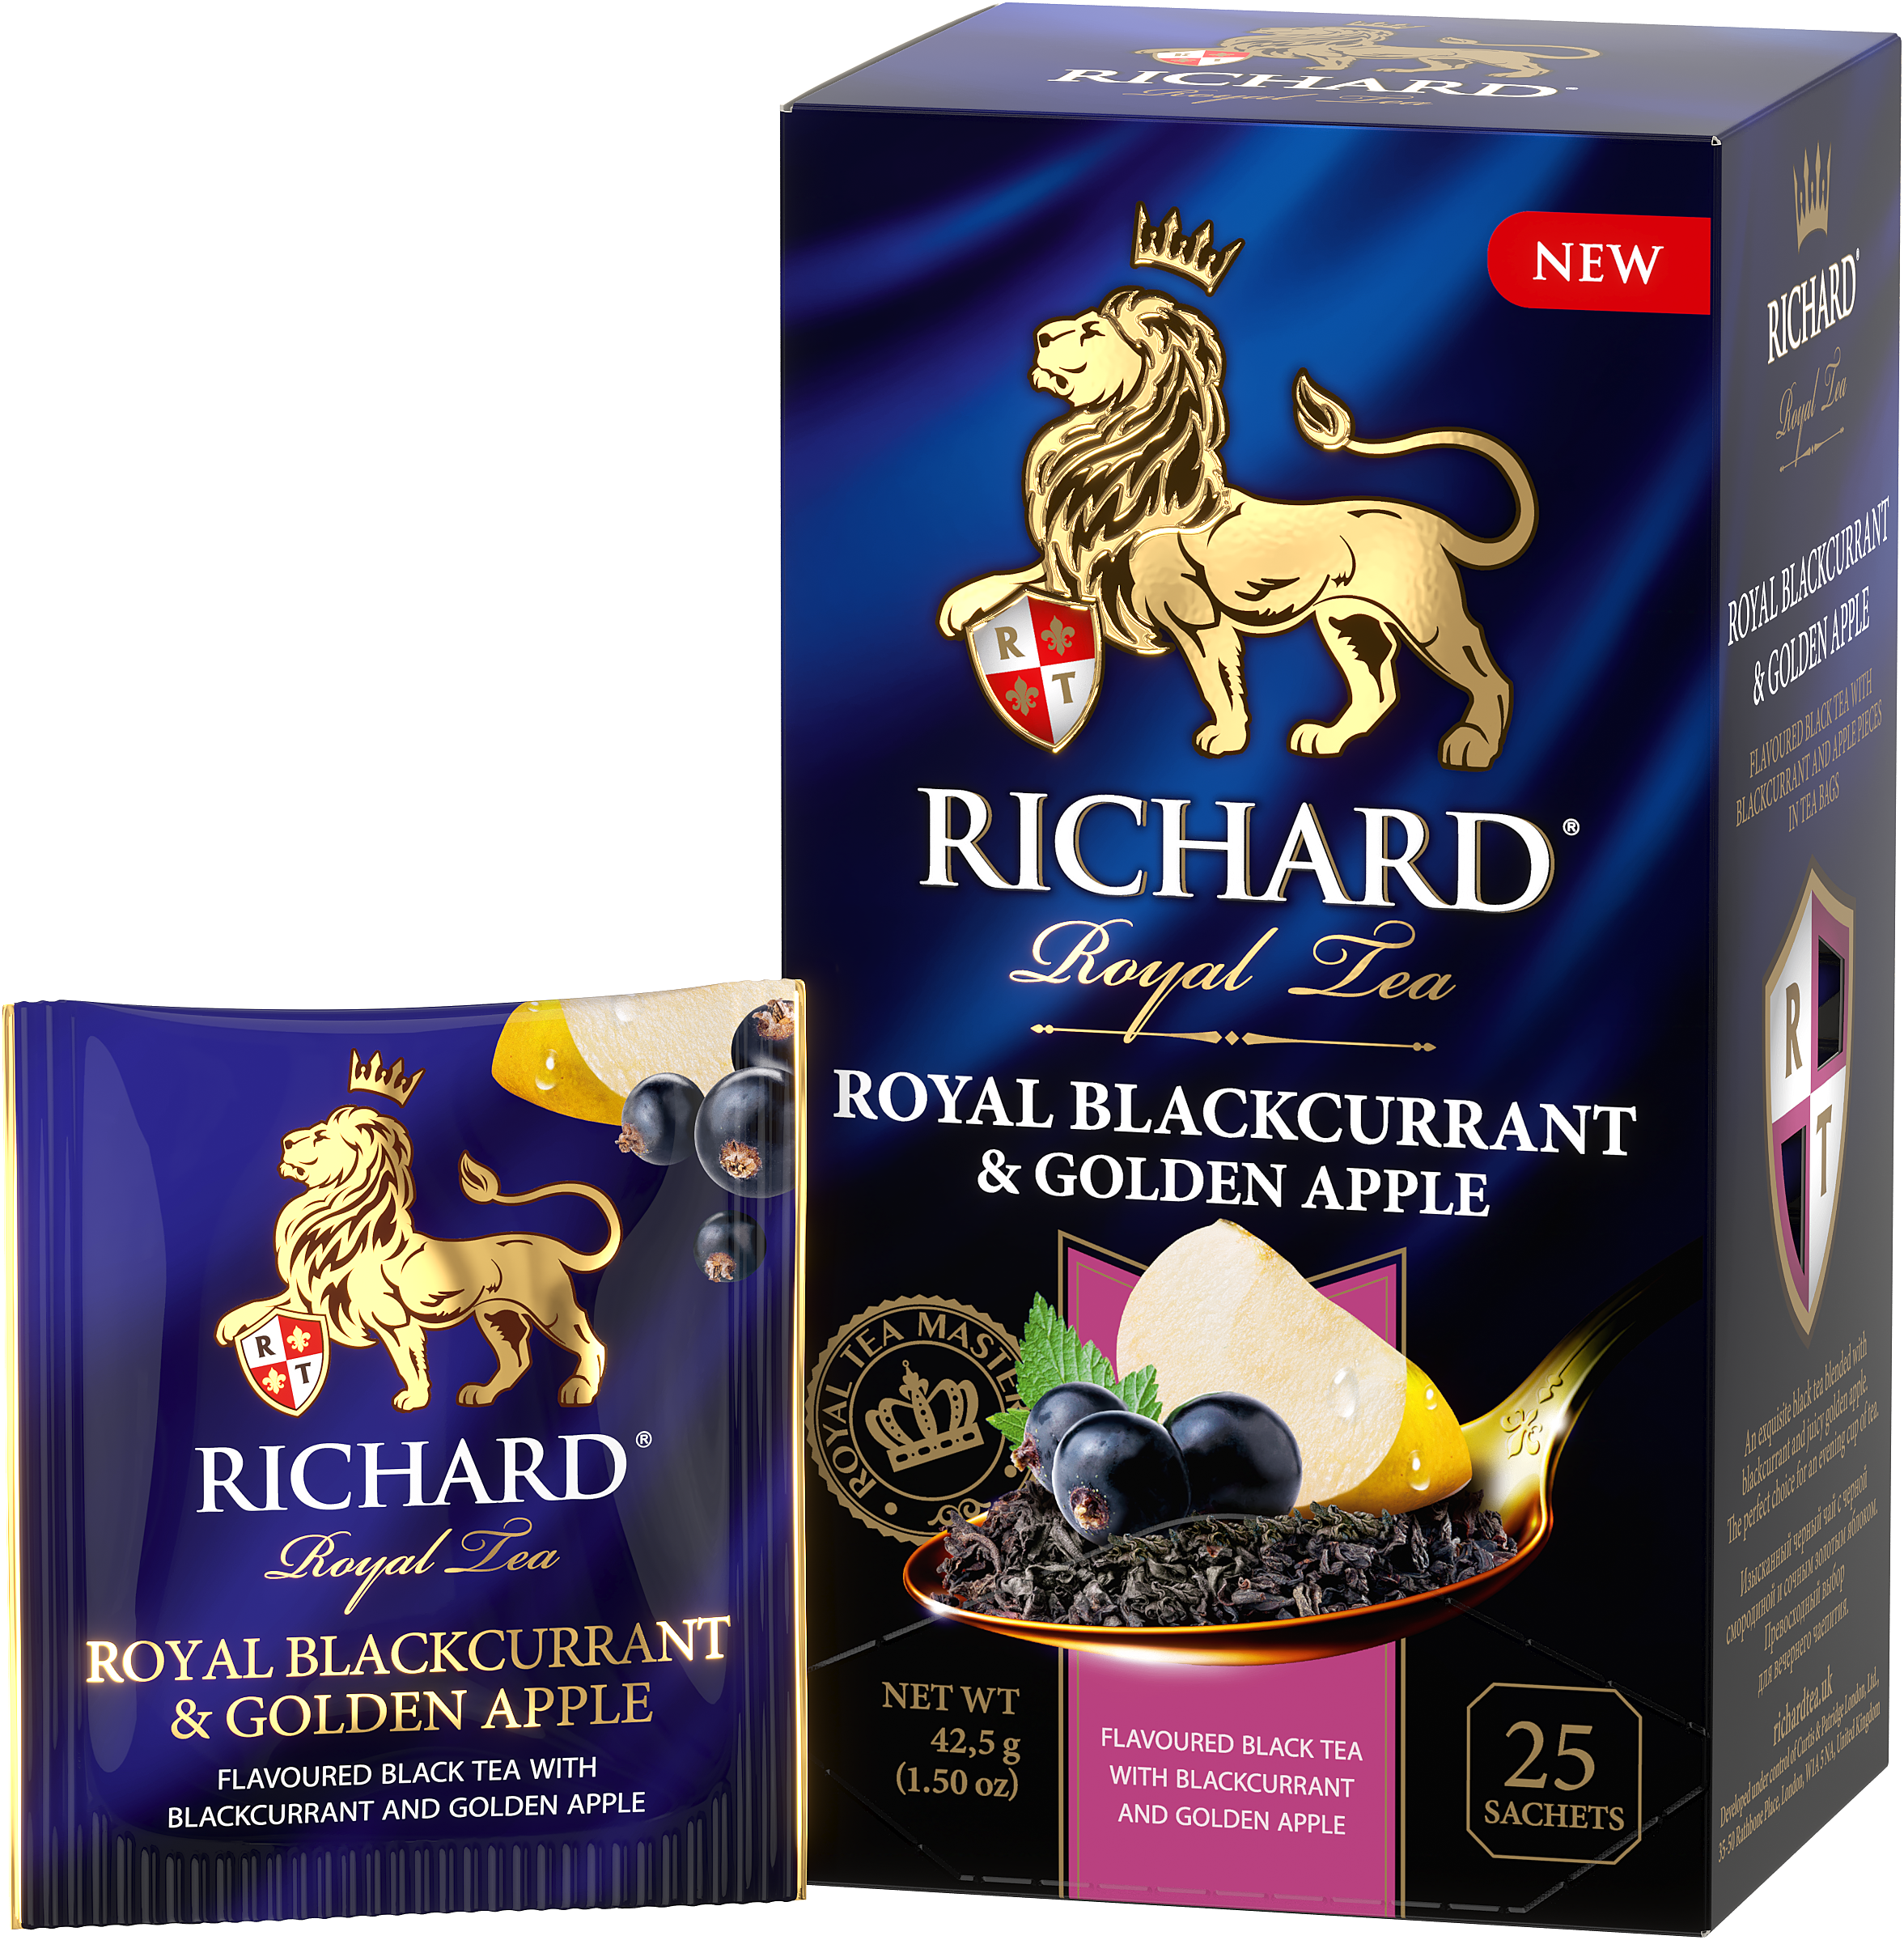 Richard Royal Blackcurrant & Golden Apple flavoured black tea - 25 sachets